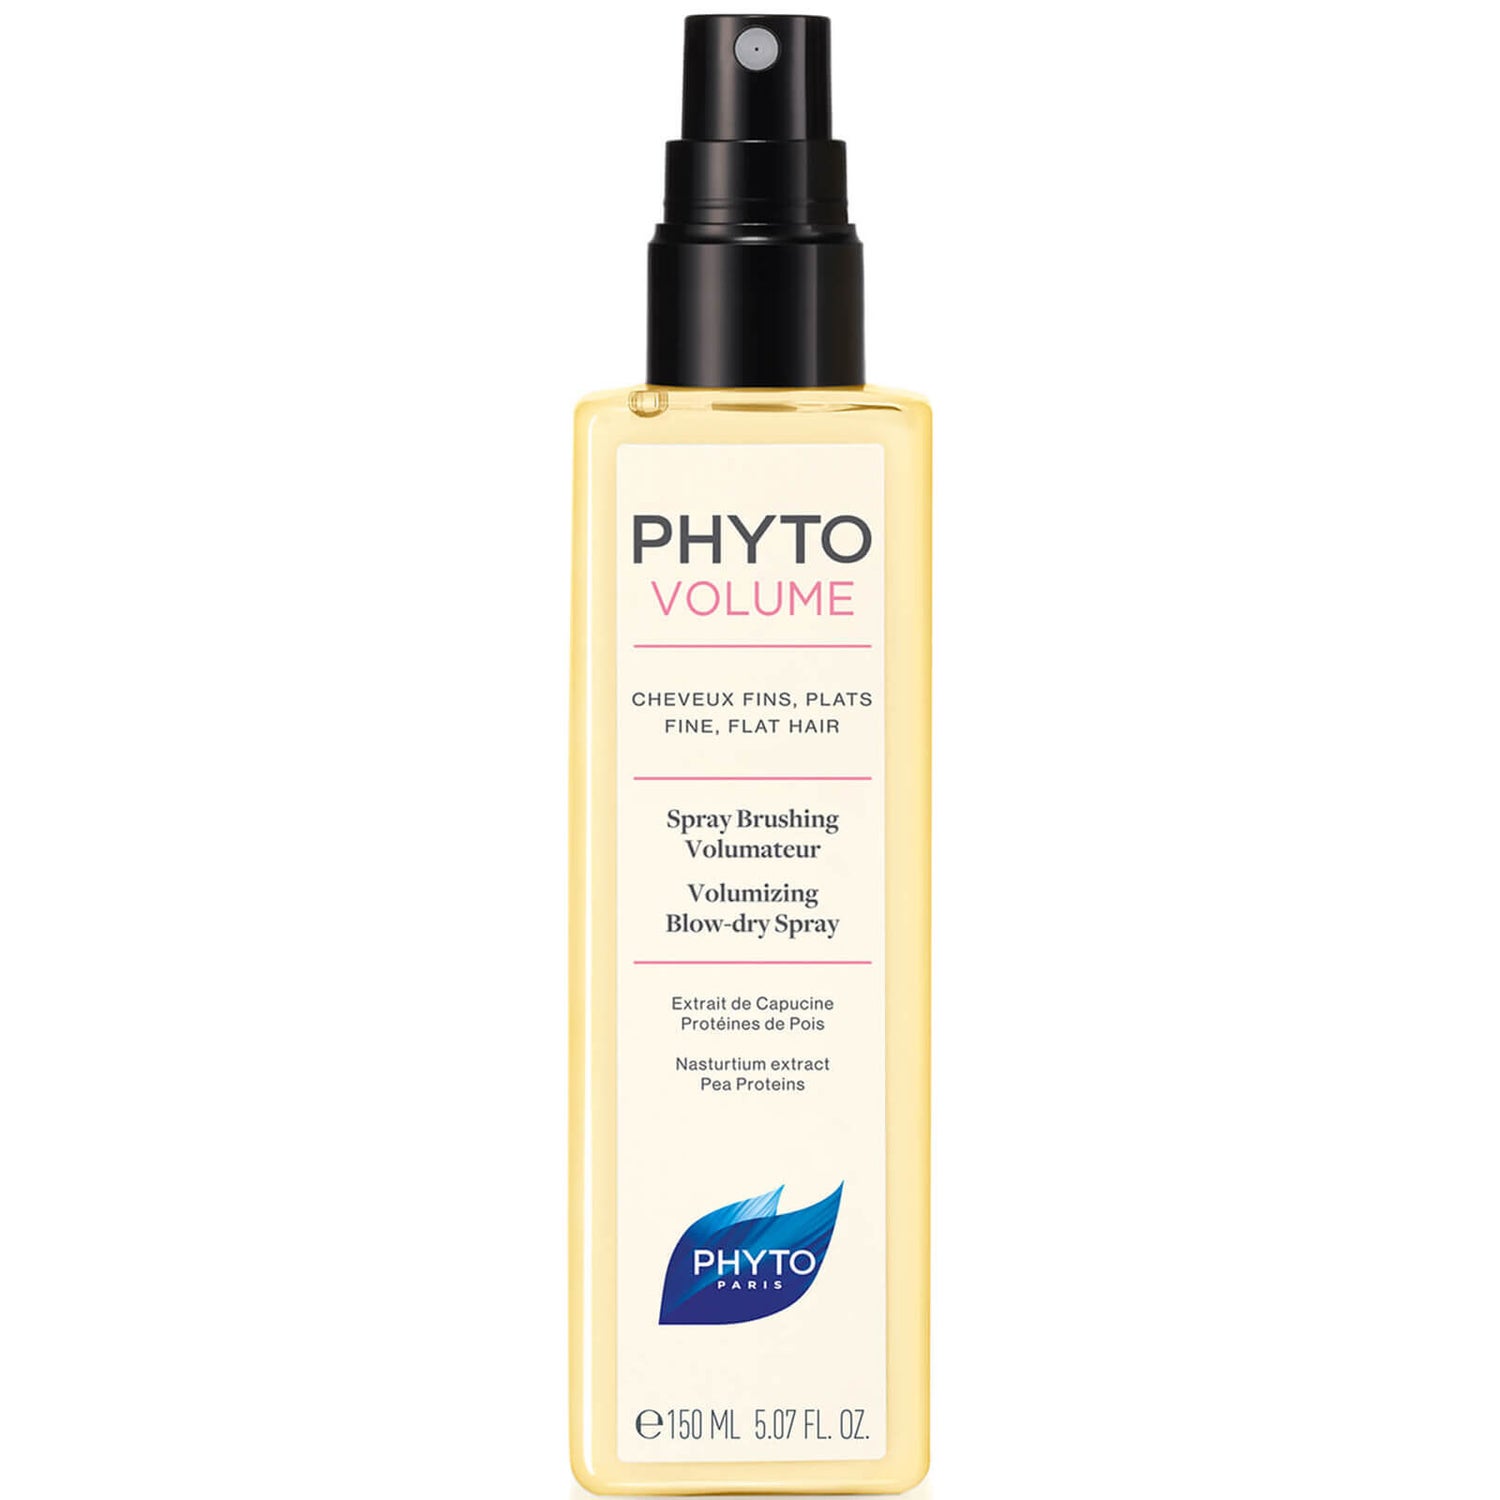 Tuuheuttava Phyto Phytovolume Actif -spray (125ml)